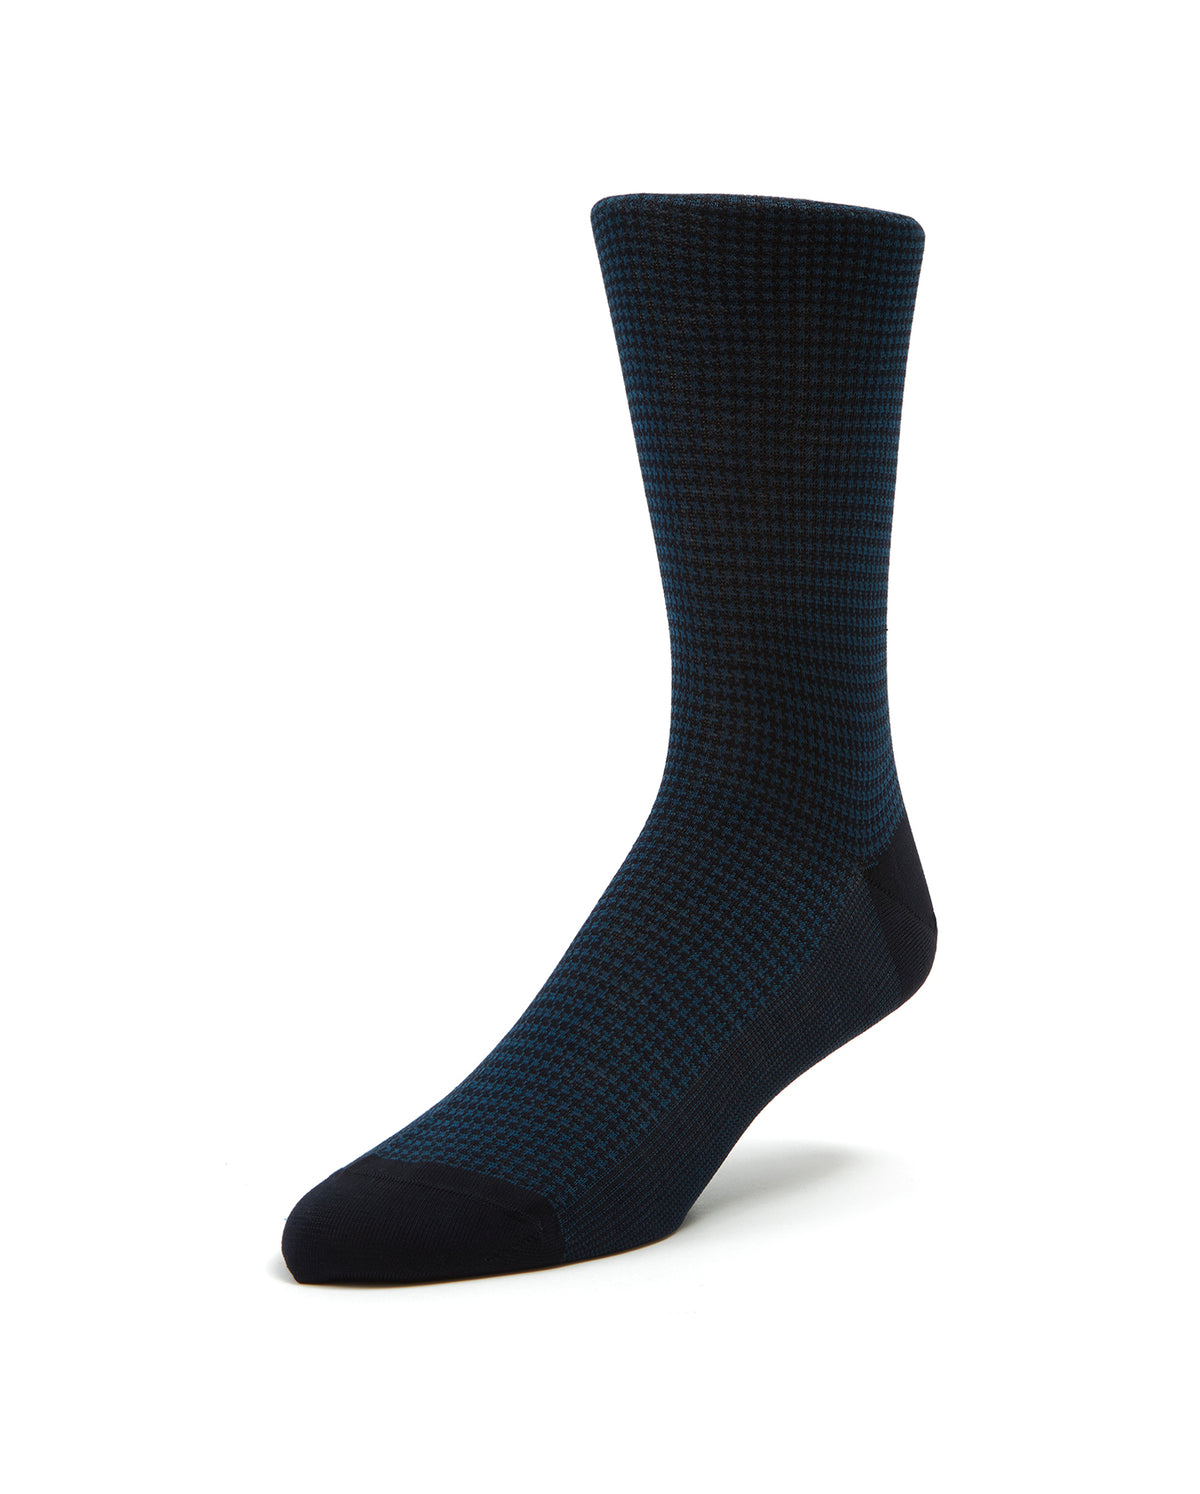 Houndstooth Calf Length Socks - Navy